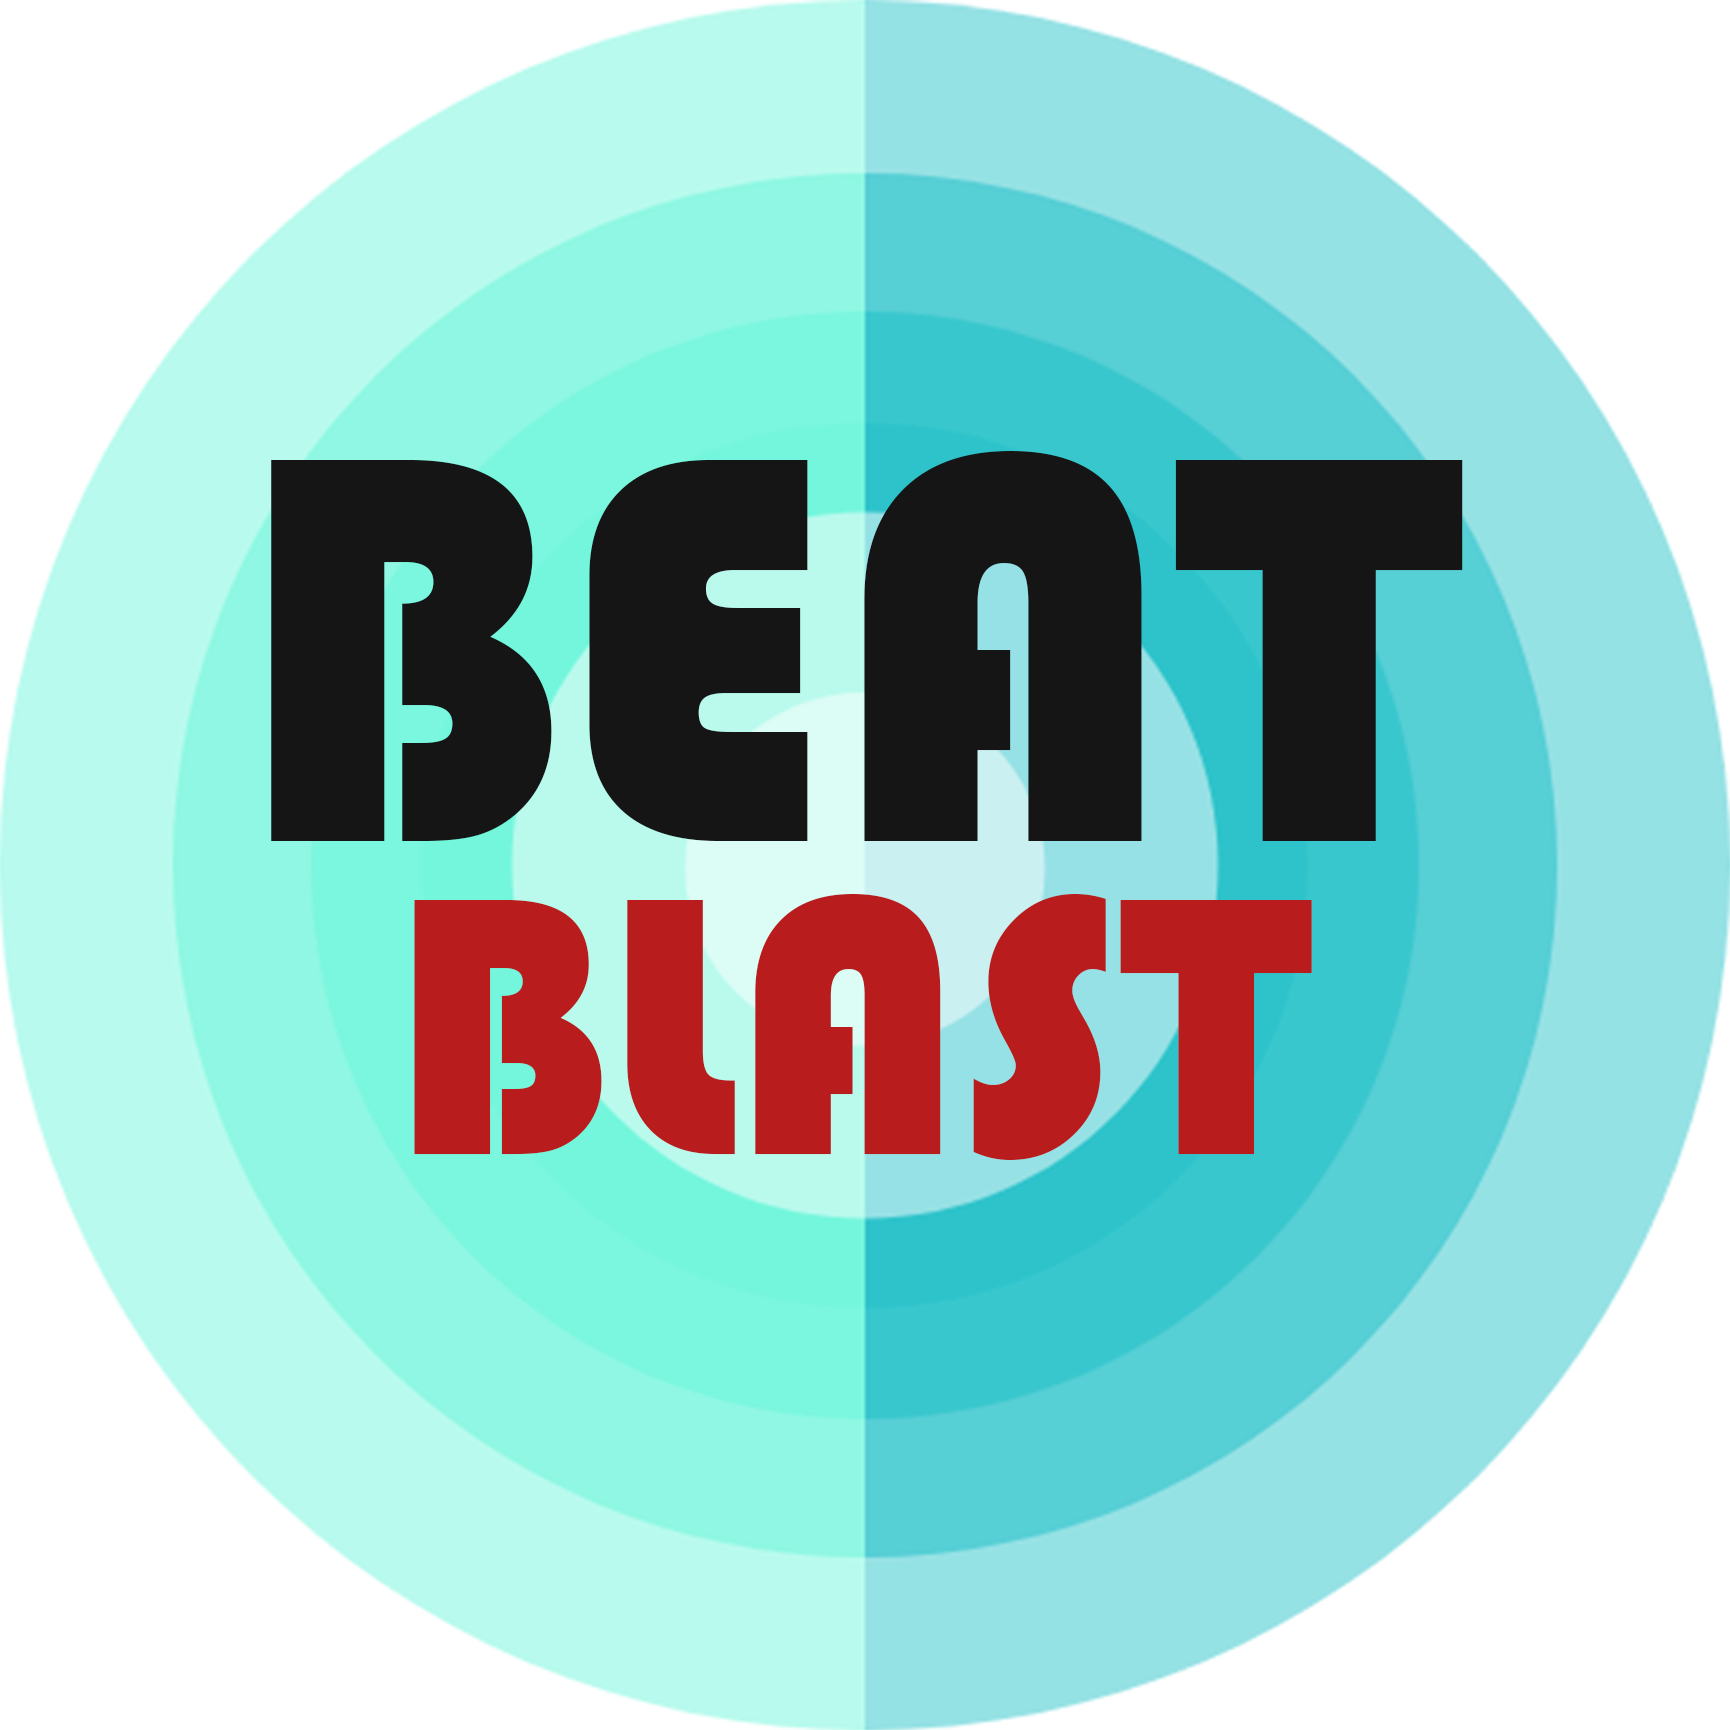 down beat blast